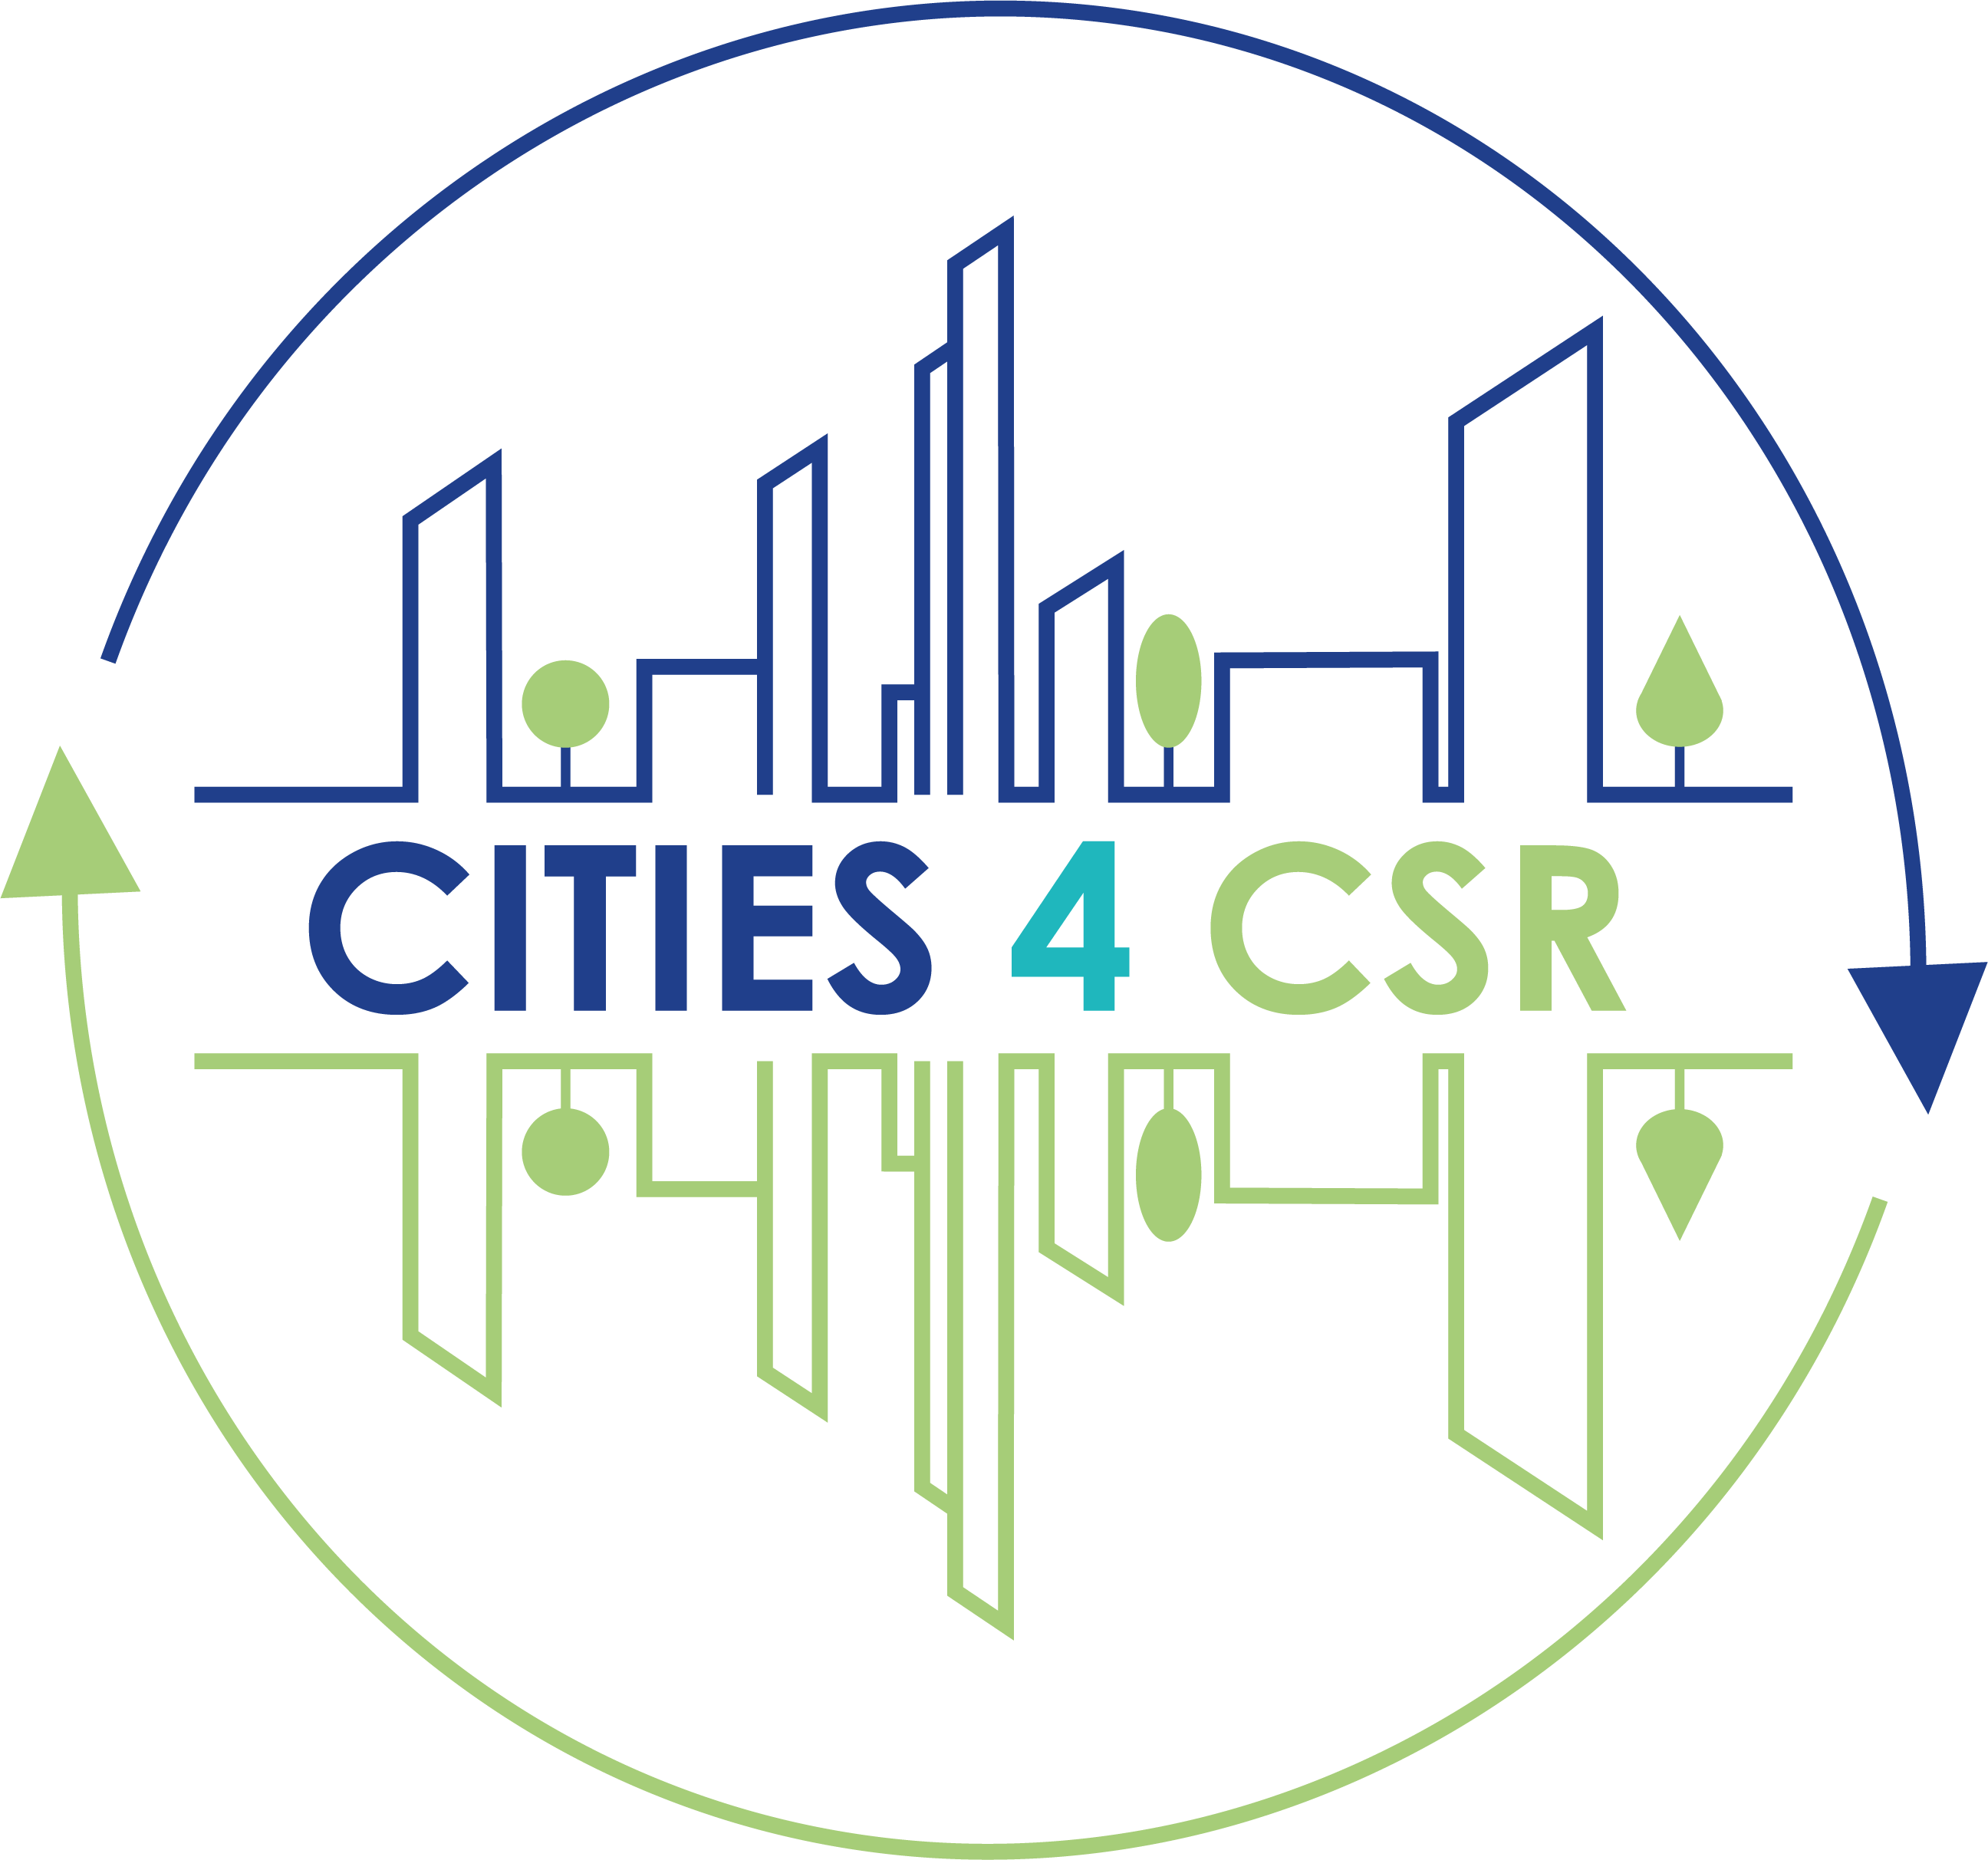 https://urbact.eu/sites/default/files/logo/cities4csr_logo.png